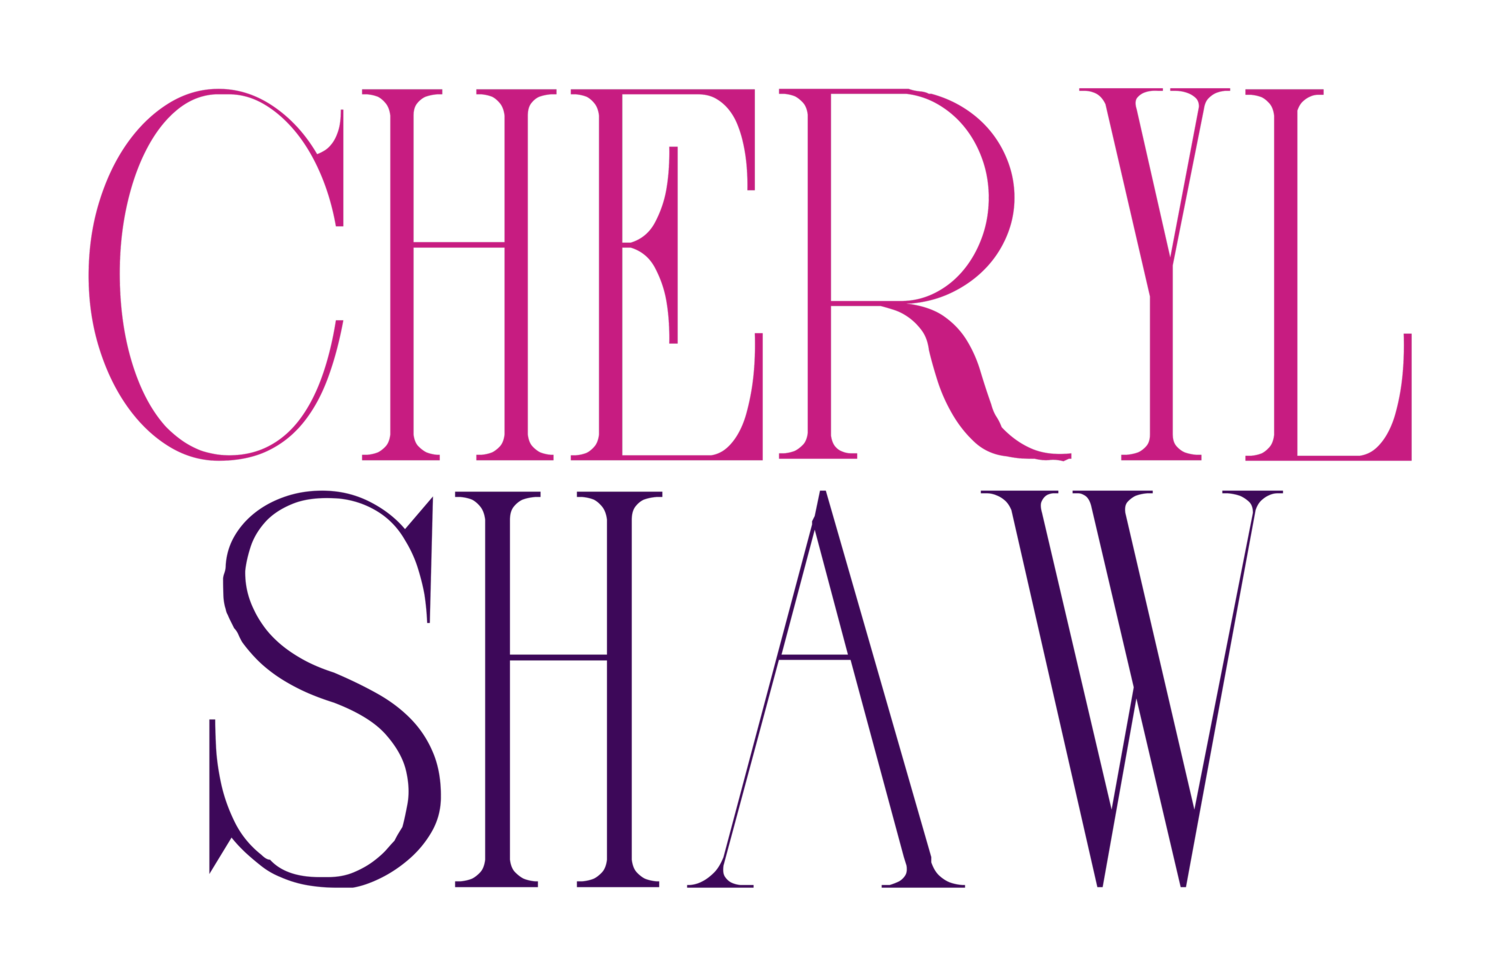 Cheryl Shaw